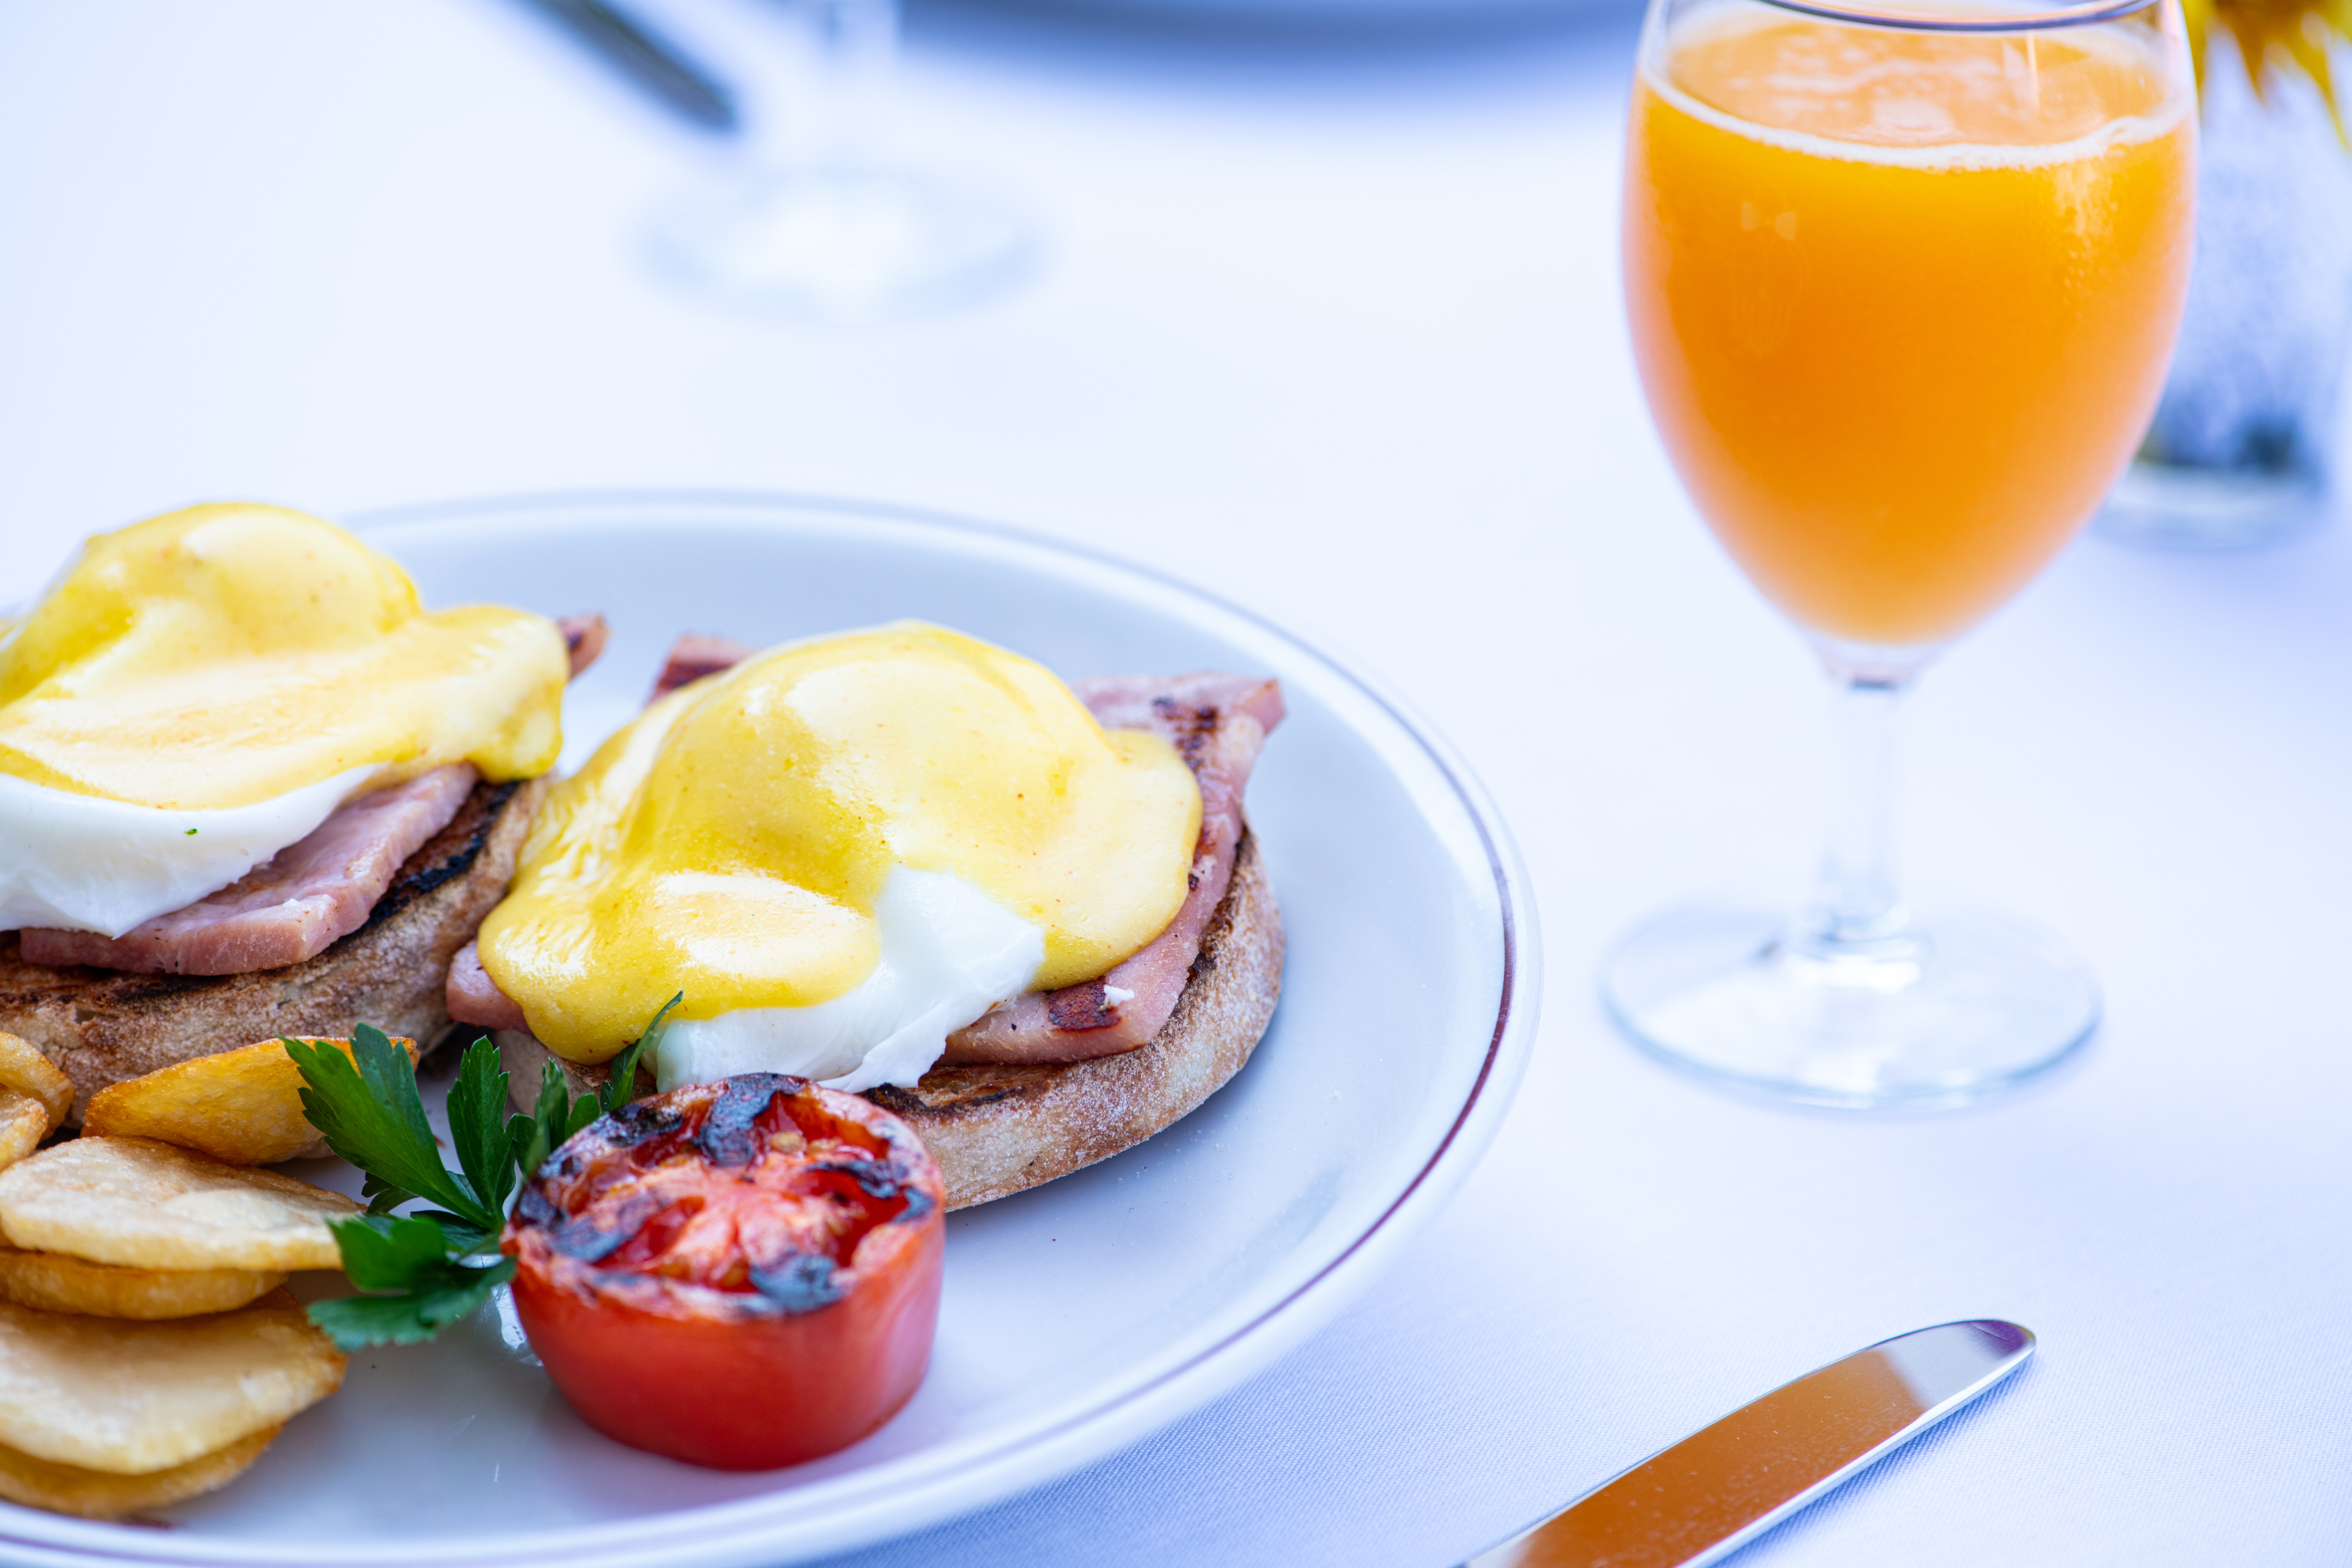 Breakfast foods on plate with orange juice